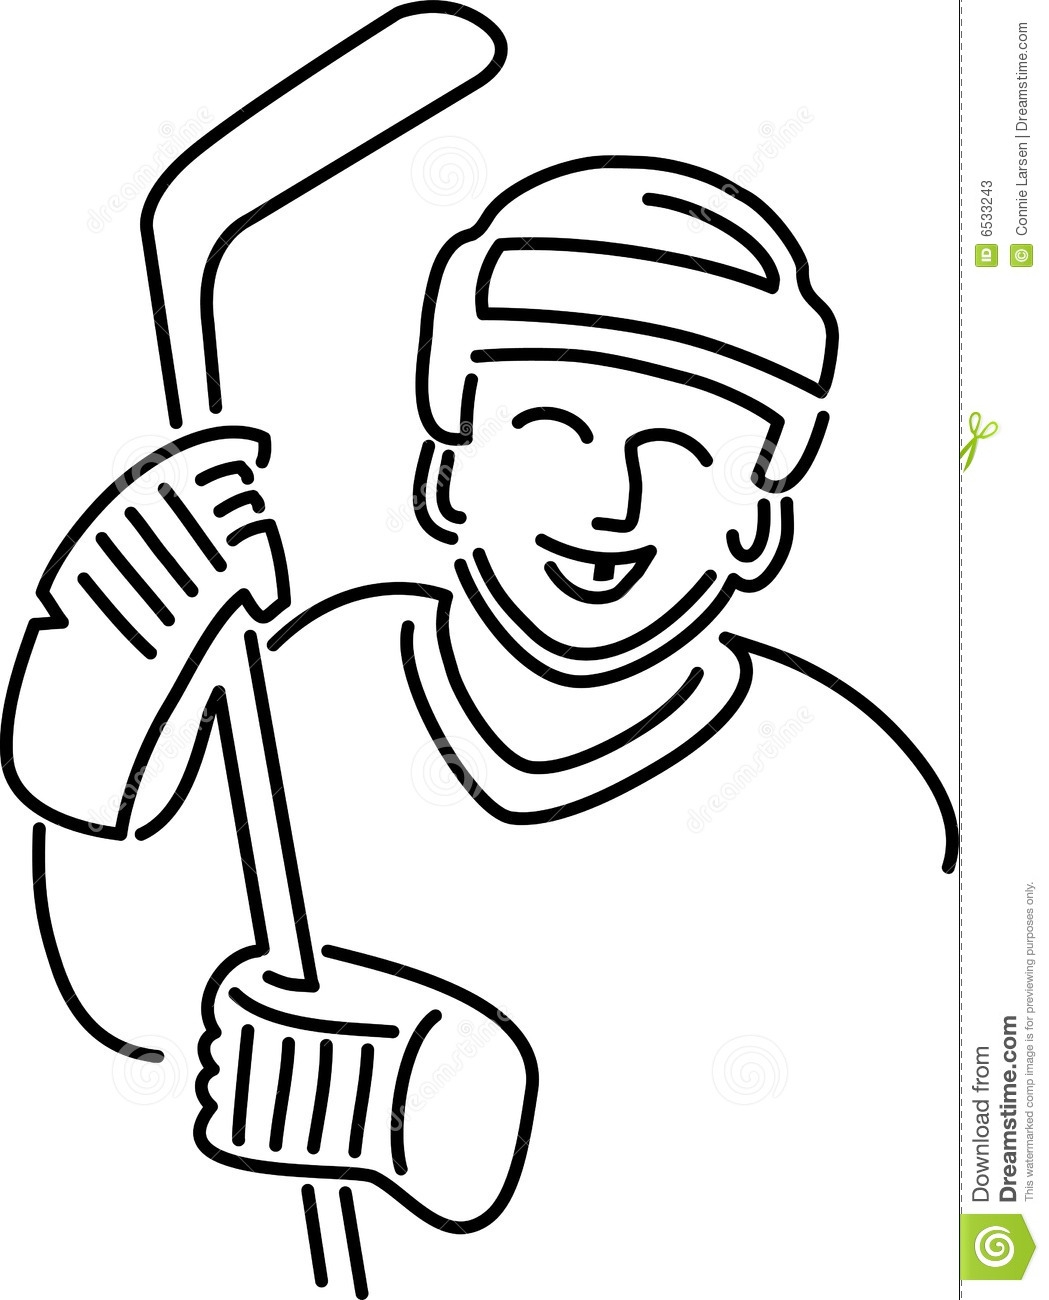 Хоккеист контурный рисунок